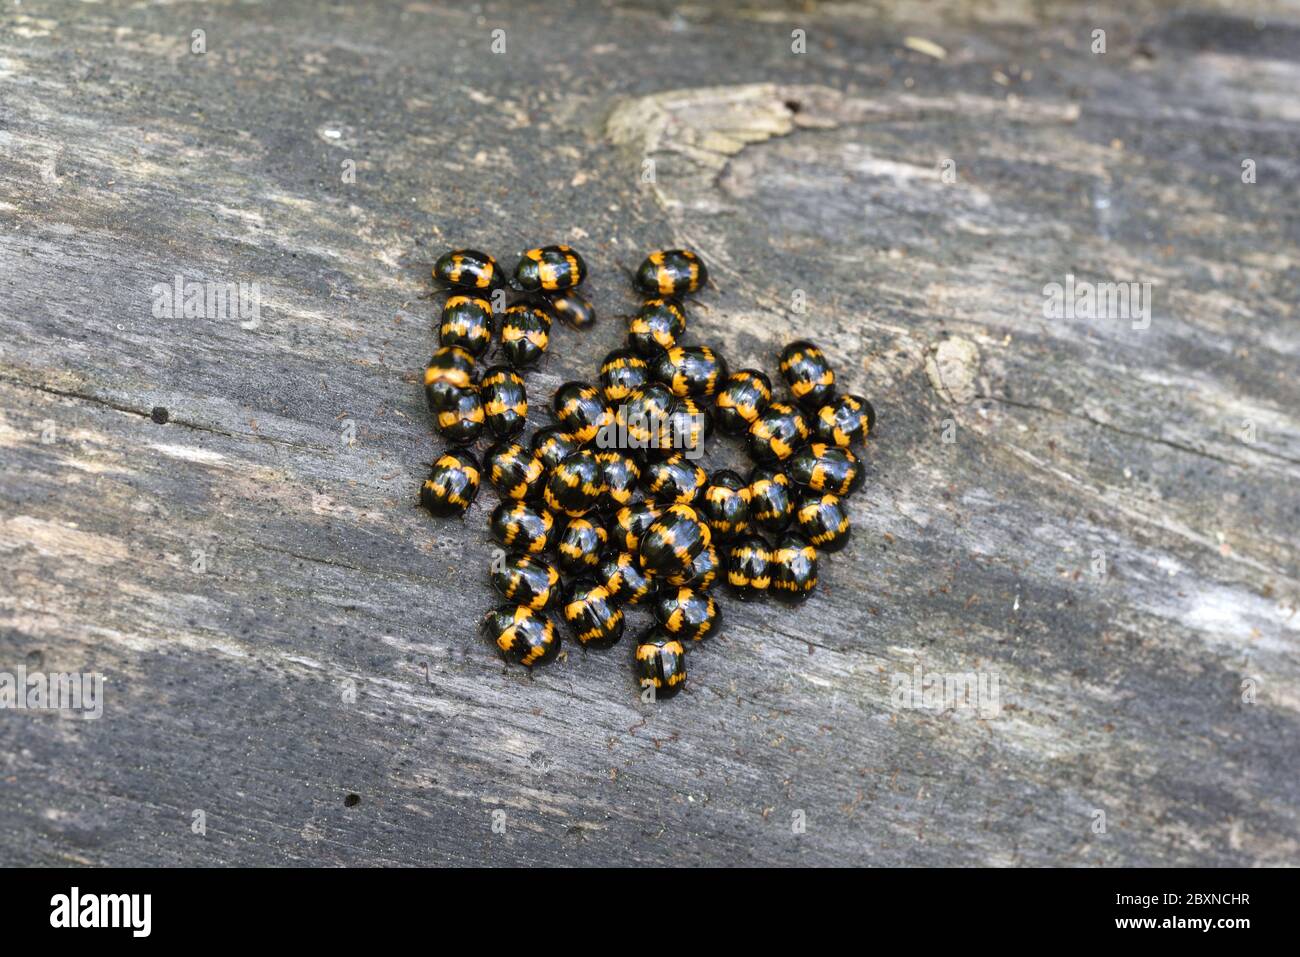 Aggregazione o gruppo di ladybirds di Harlequin, axyridis di Harmonia, aka ladybeetles asiatici, ladybirds asiatici multicolore o ladybeetles di Halloween Foto Stock